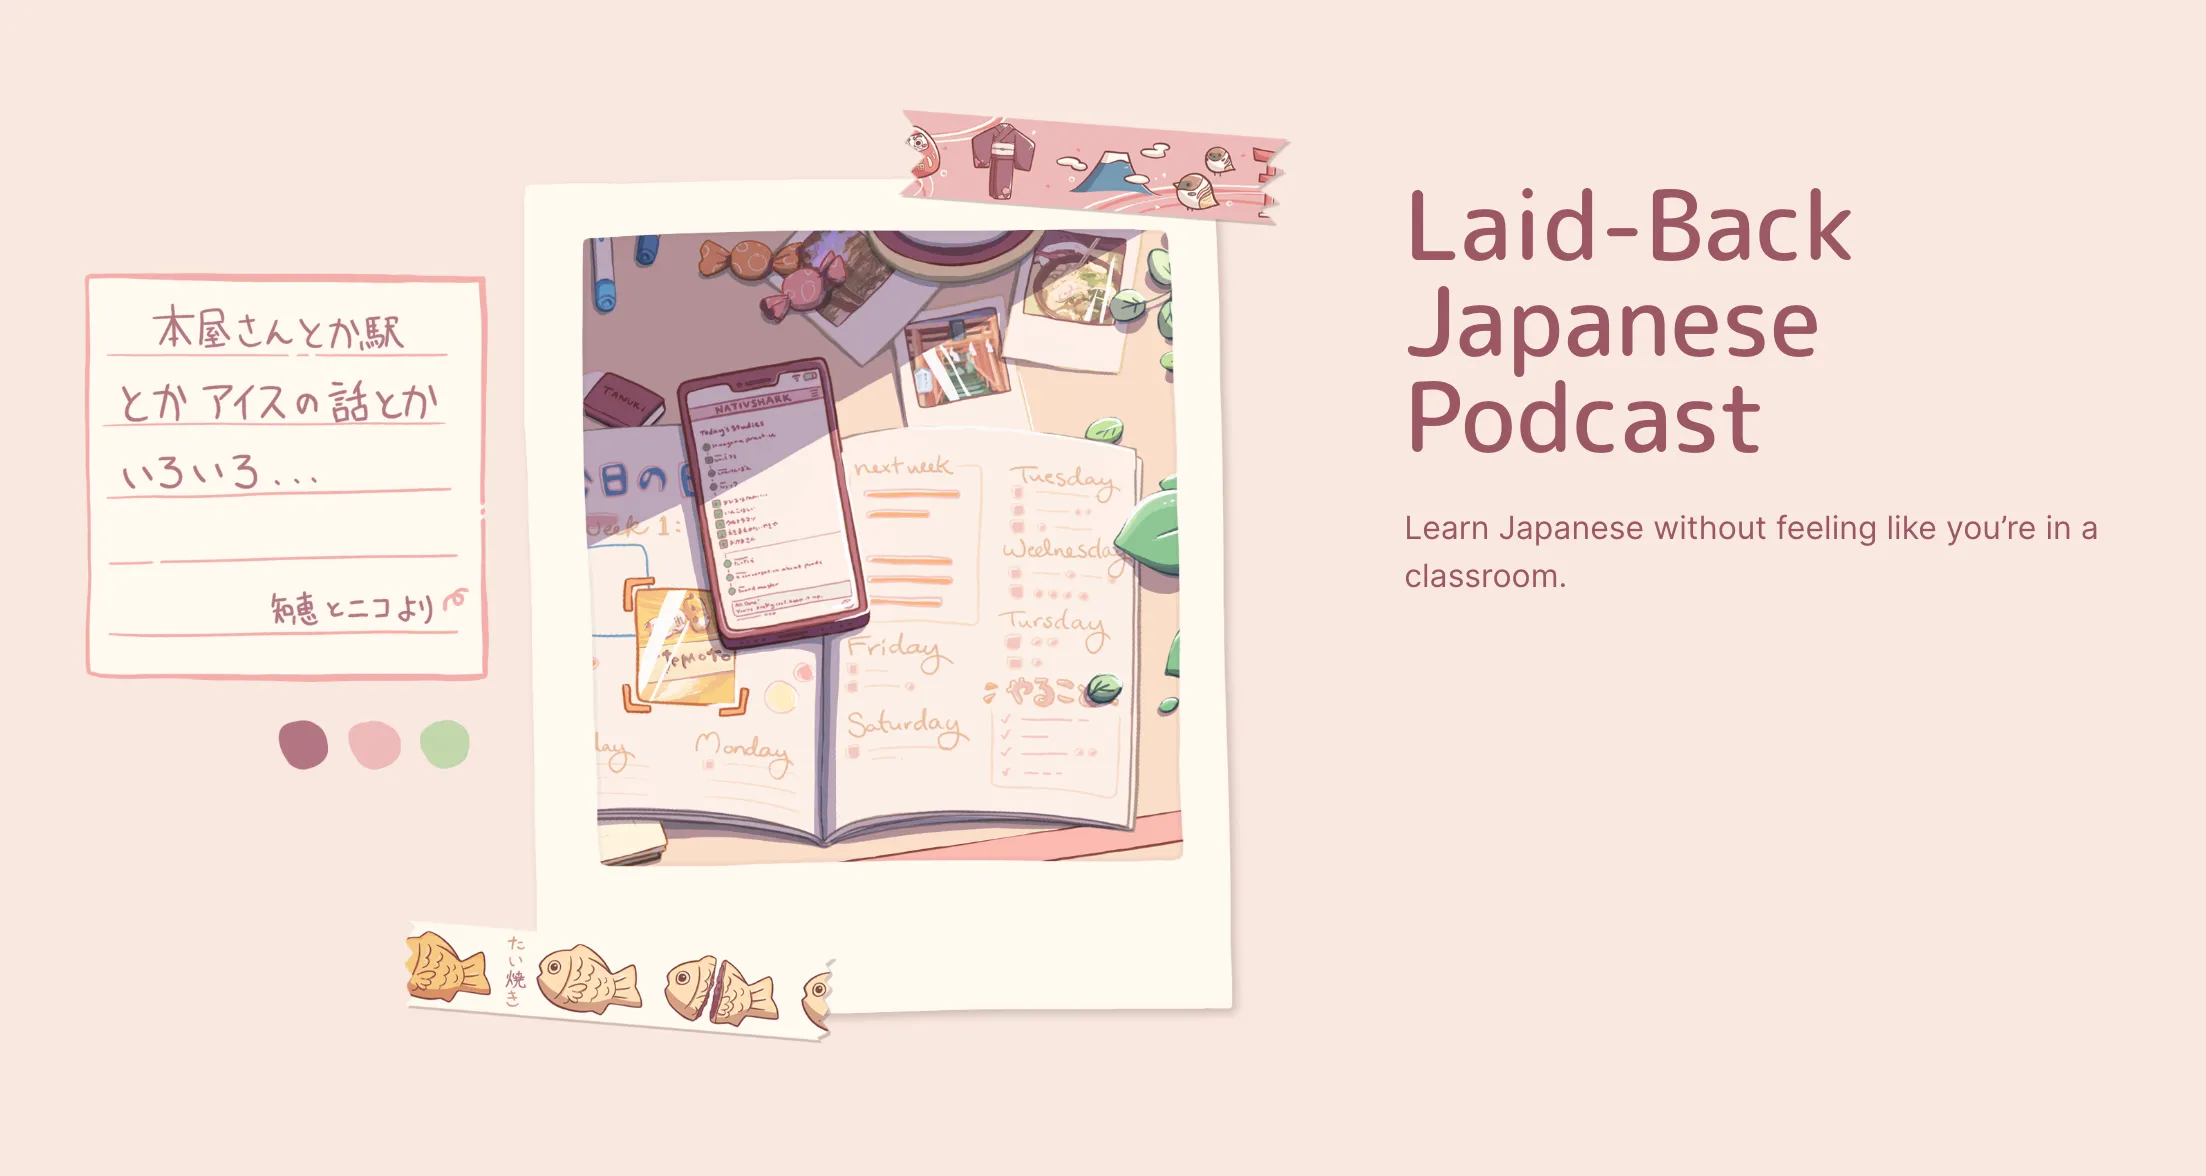 Laid-back Japanese Podcast landing page image